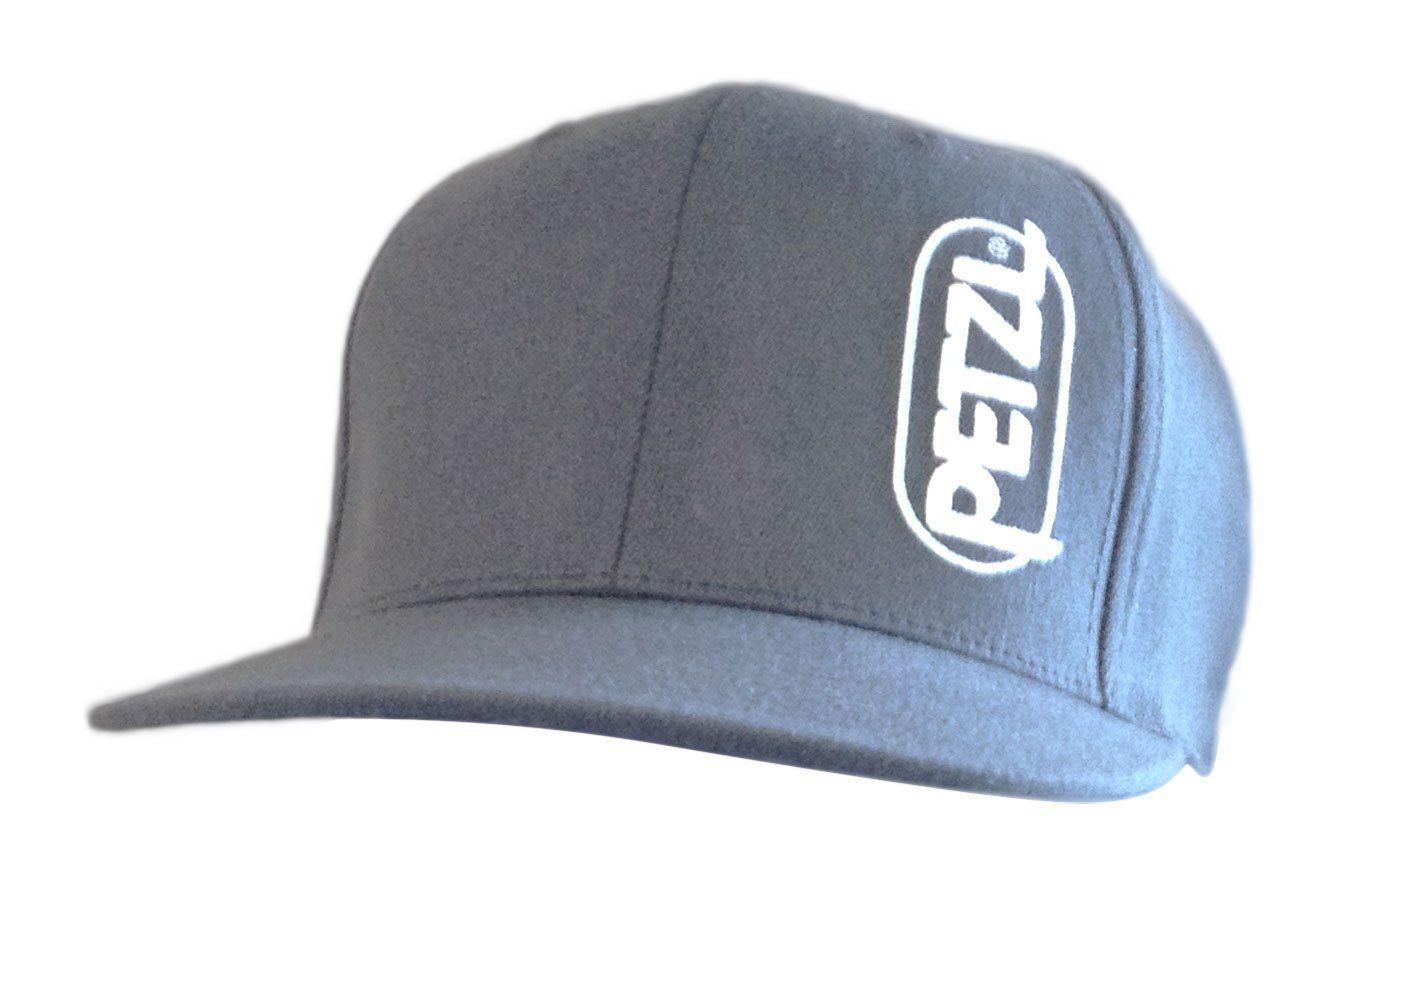 Petzl Logo - Petzl Vertical Logo Ball Cap | Climbing | Pinterest | Climbing, Cap ...